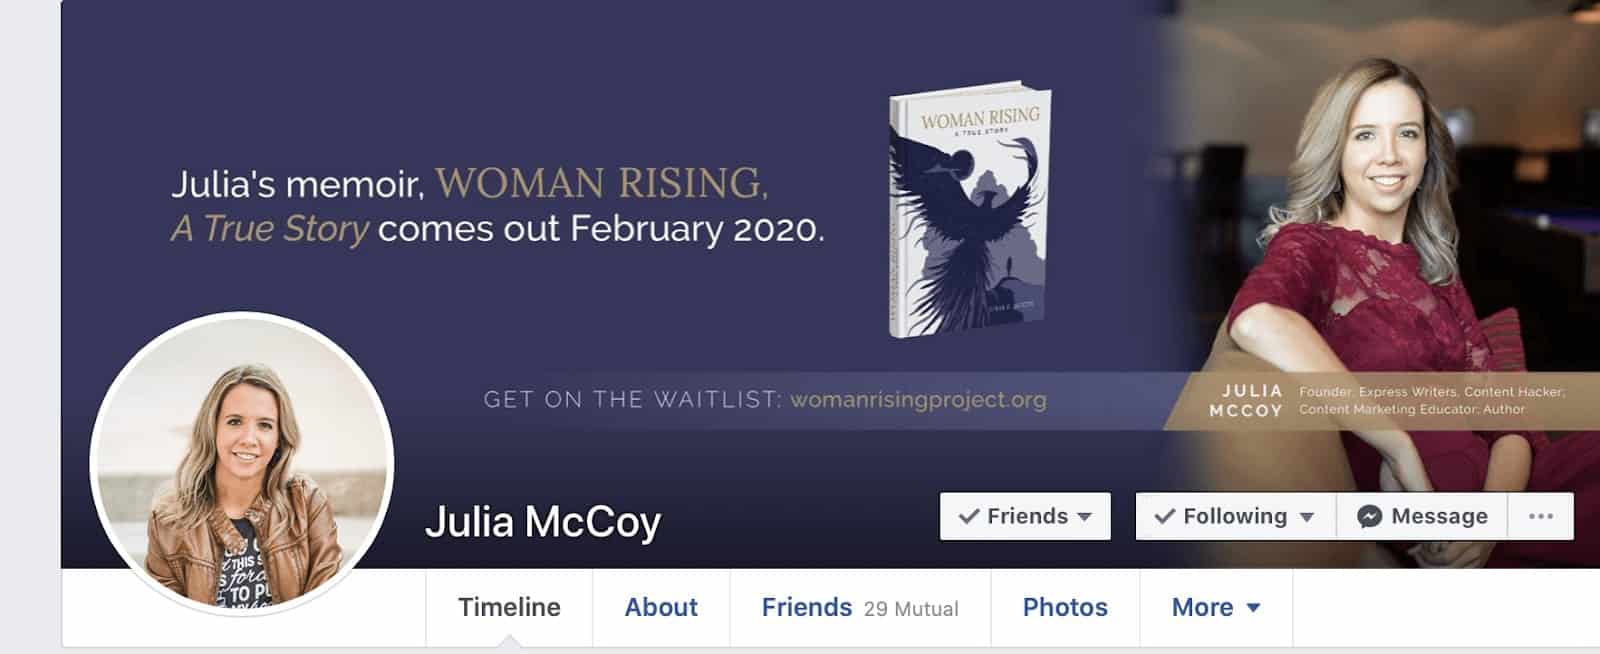 Julia McCoy example of successful marketing self-published books